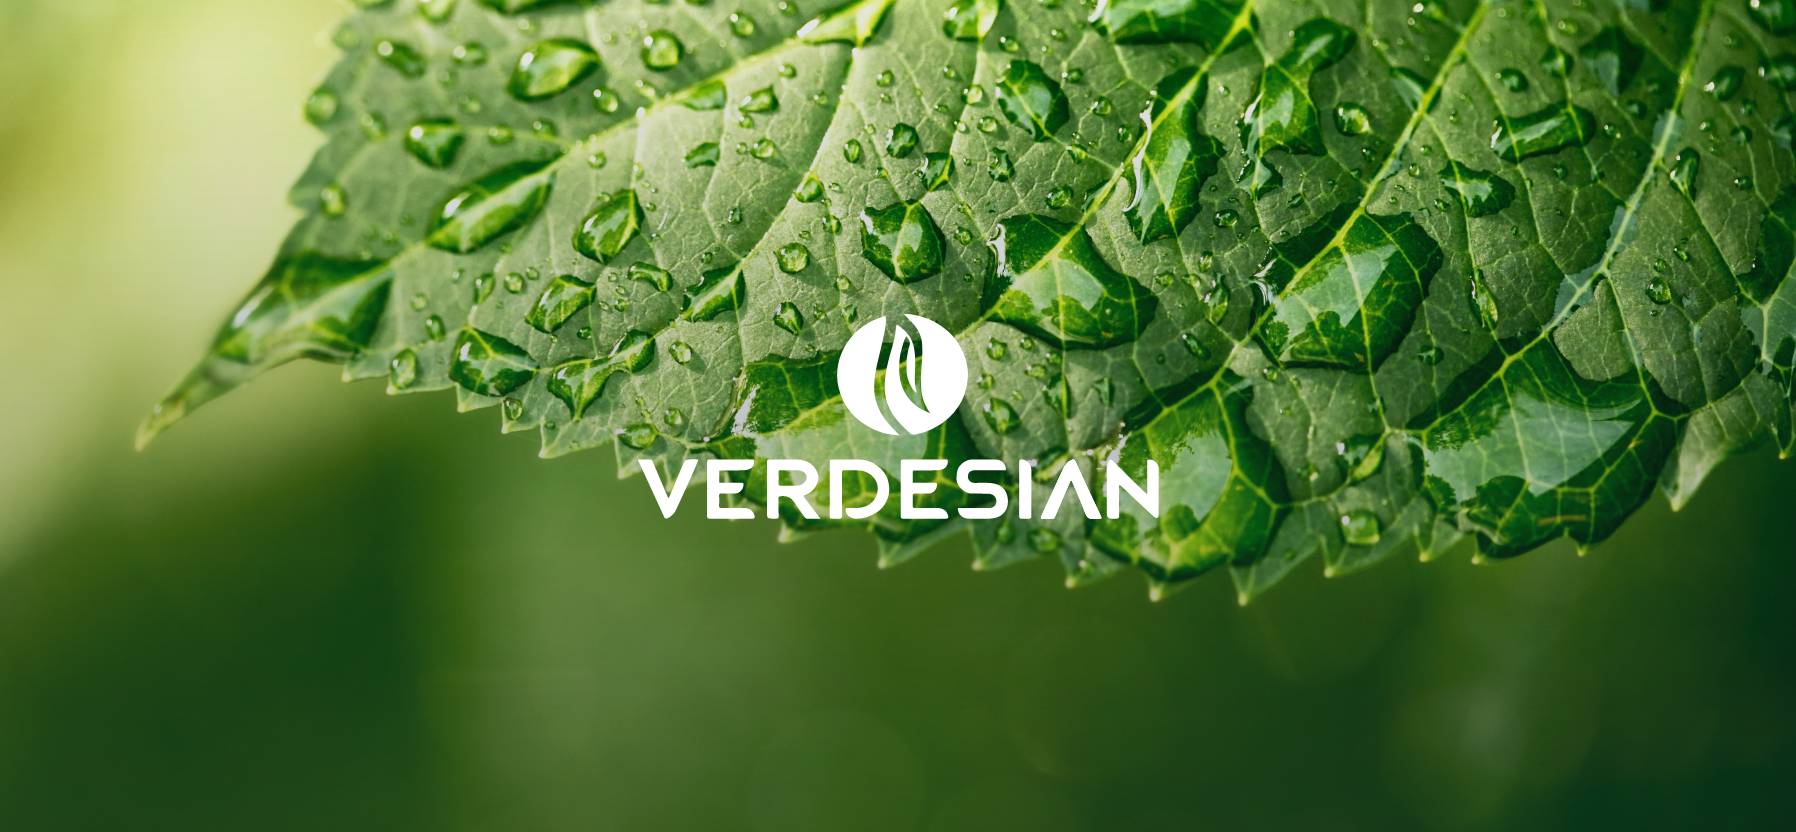 Verdesian Life Sciences Announces Investment from AEA Investors@2x